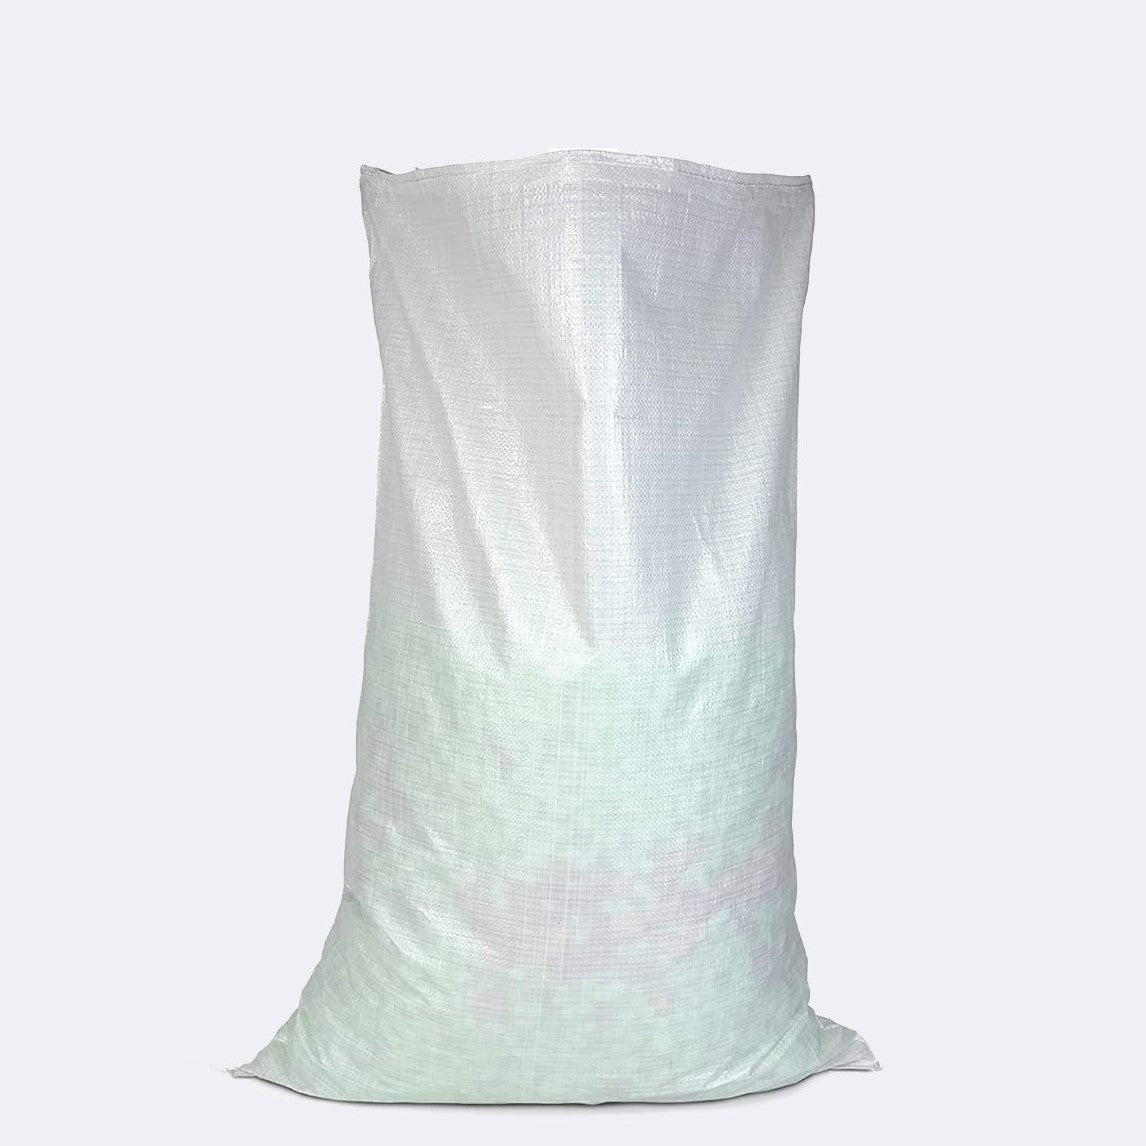 50x80cm Rubble Sack - Woven Polypropylene – Pro Bag